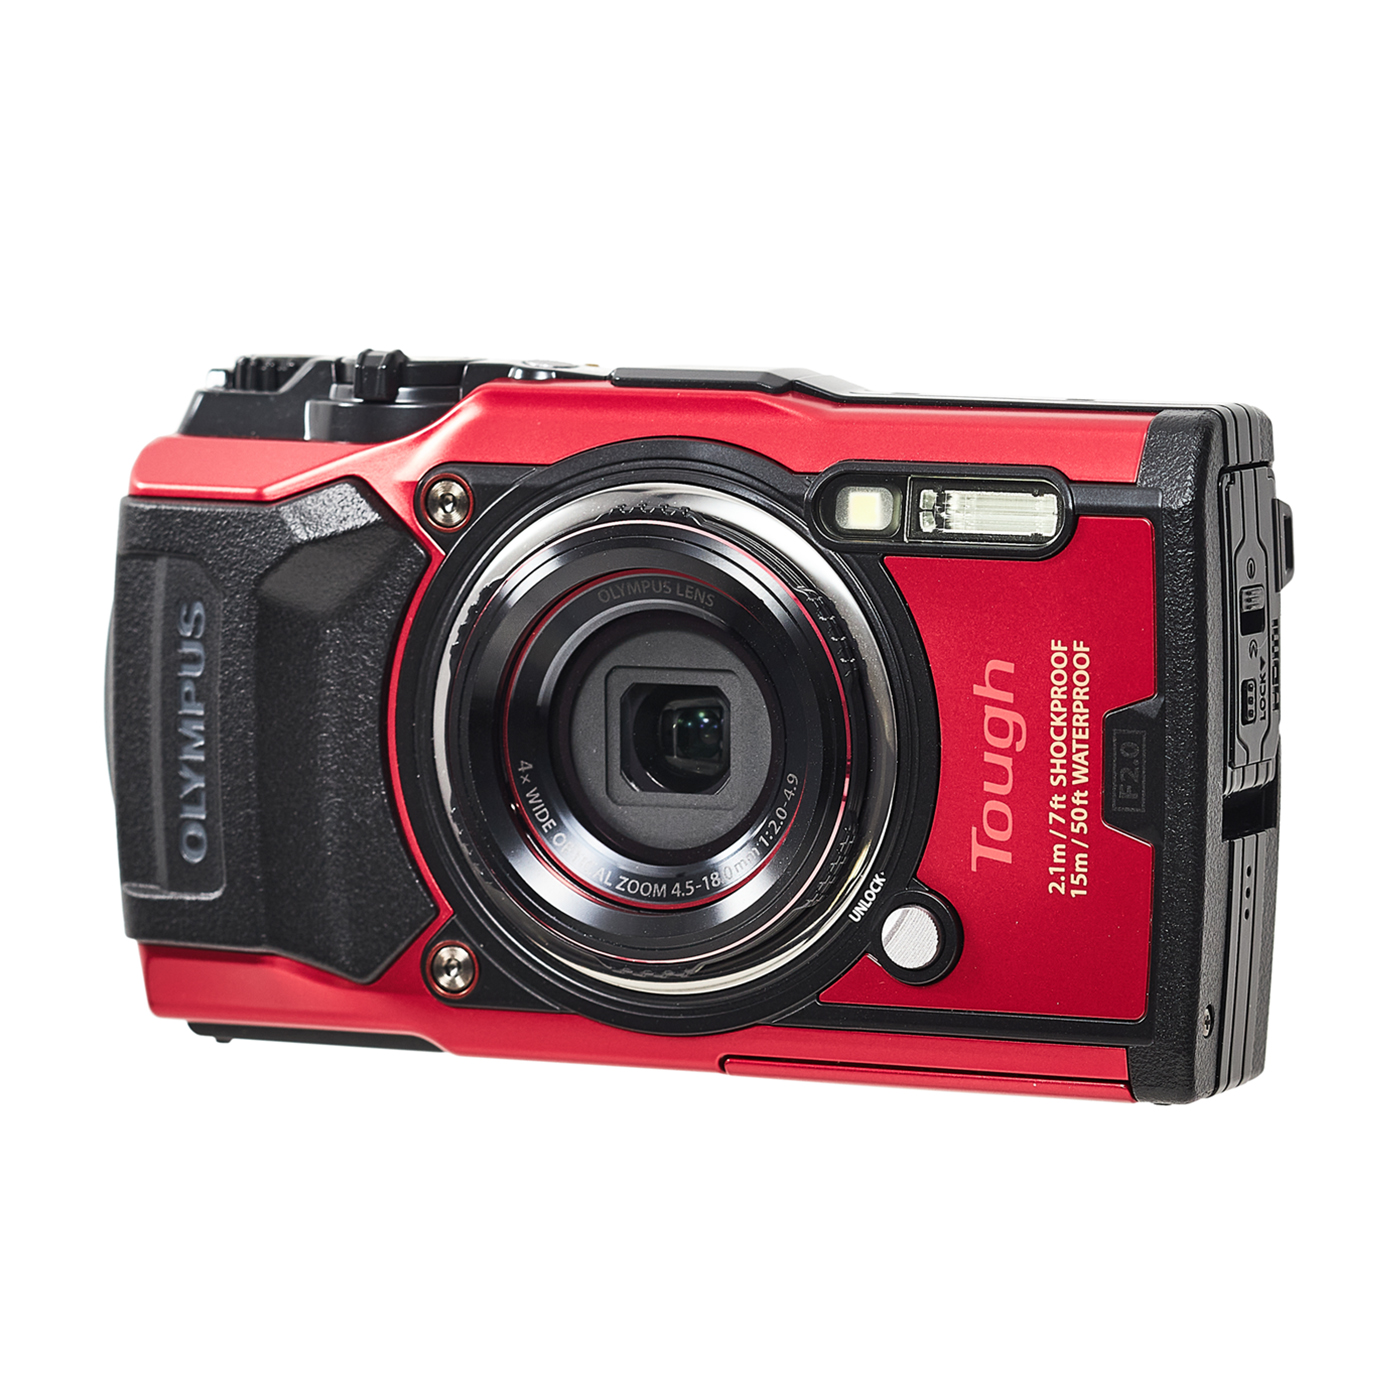 OLYMPUS デジタルカメラ Tough TG-6 ブラック 1200万画素CMOS F2.0 15m 防水 100kgf耐荷重 GPS -  vsmarket.com.ua